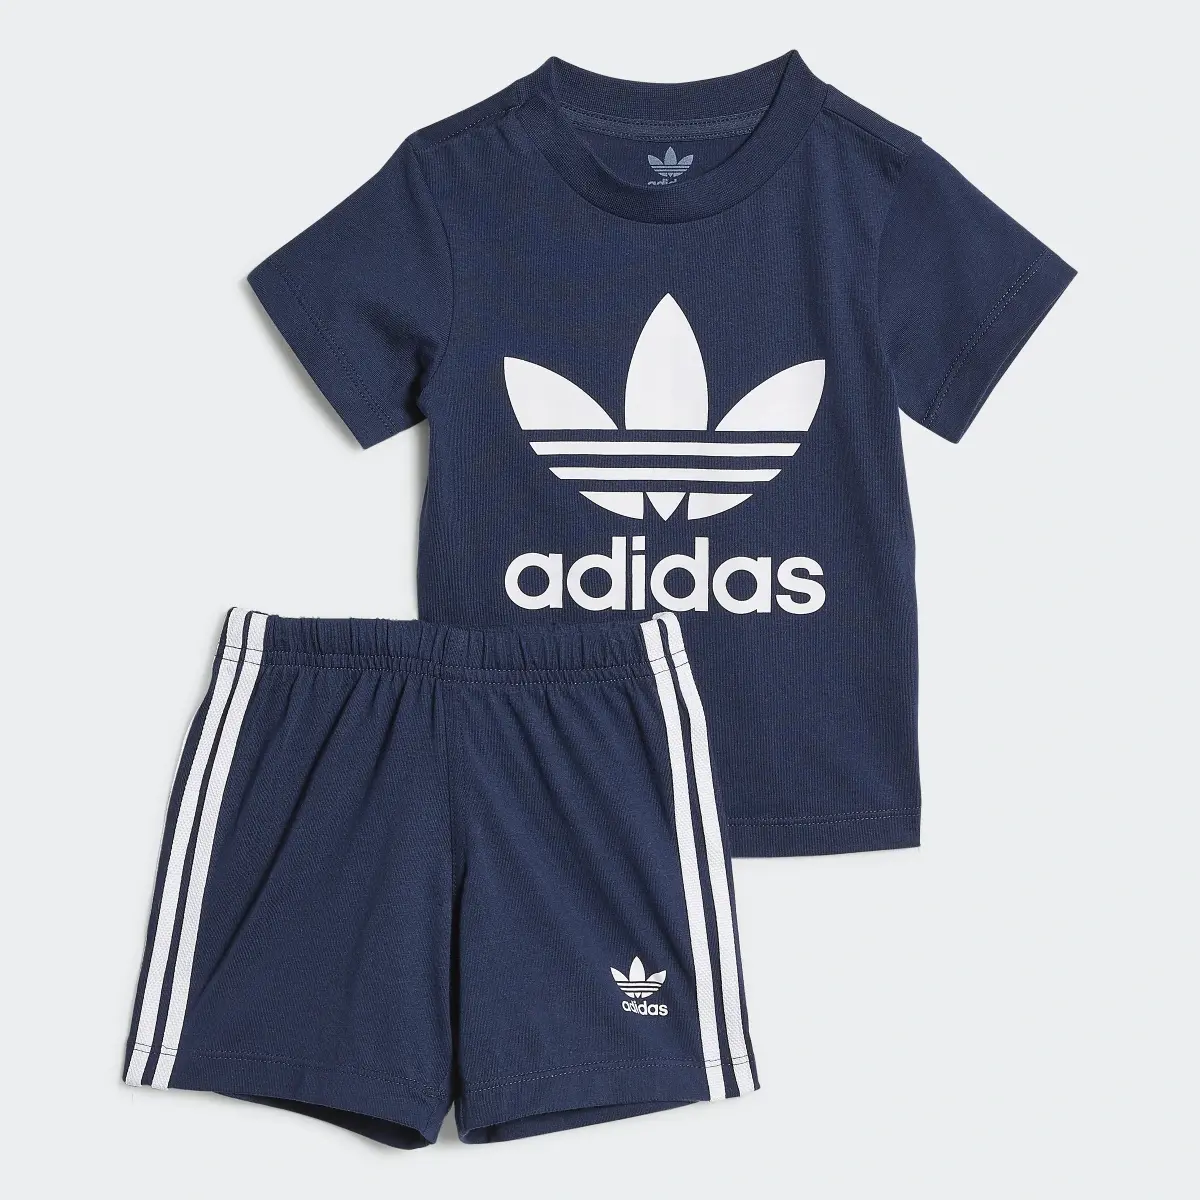 Adidas Trefoil Shorts Tee Set. 1